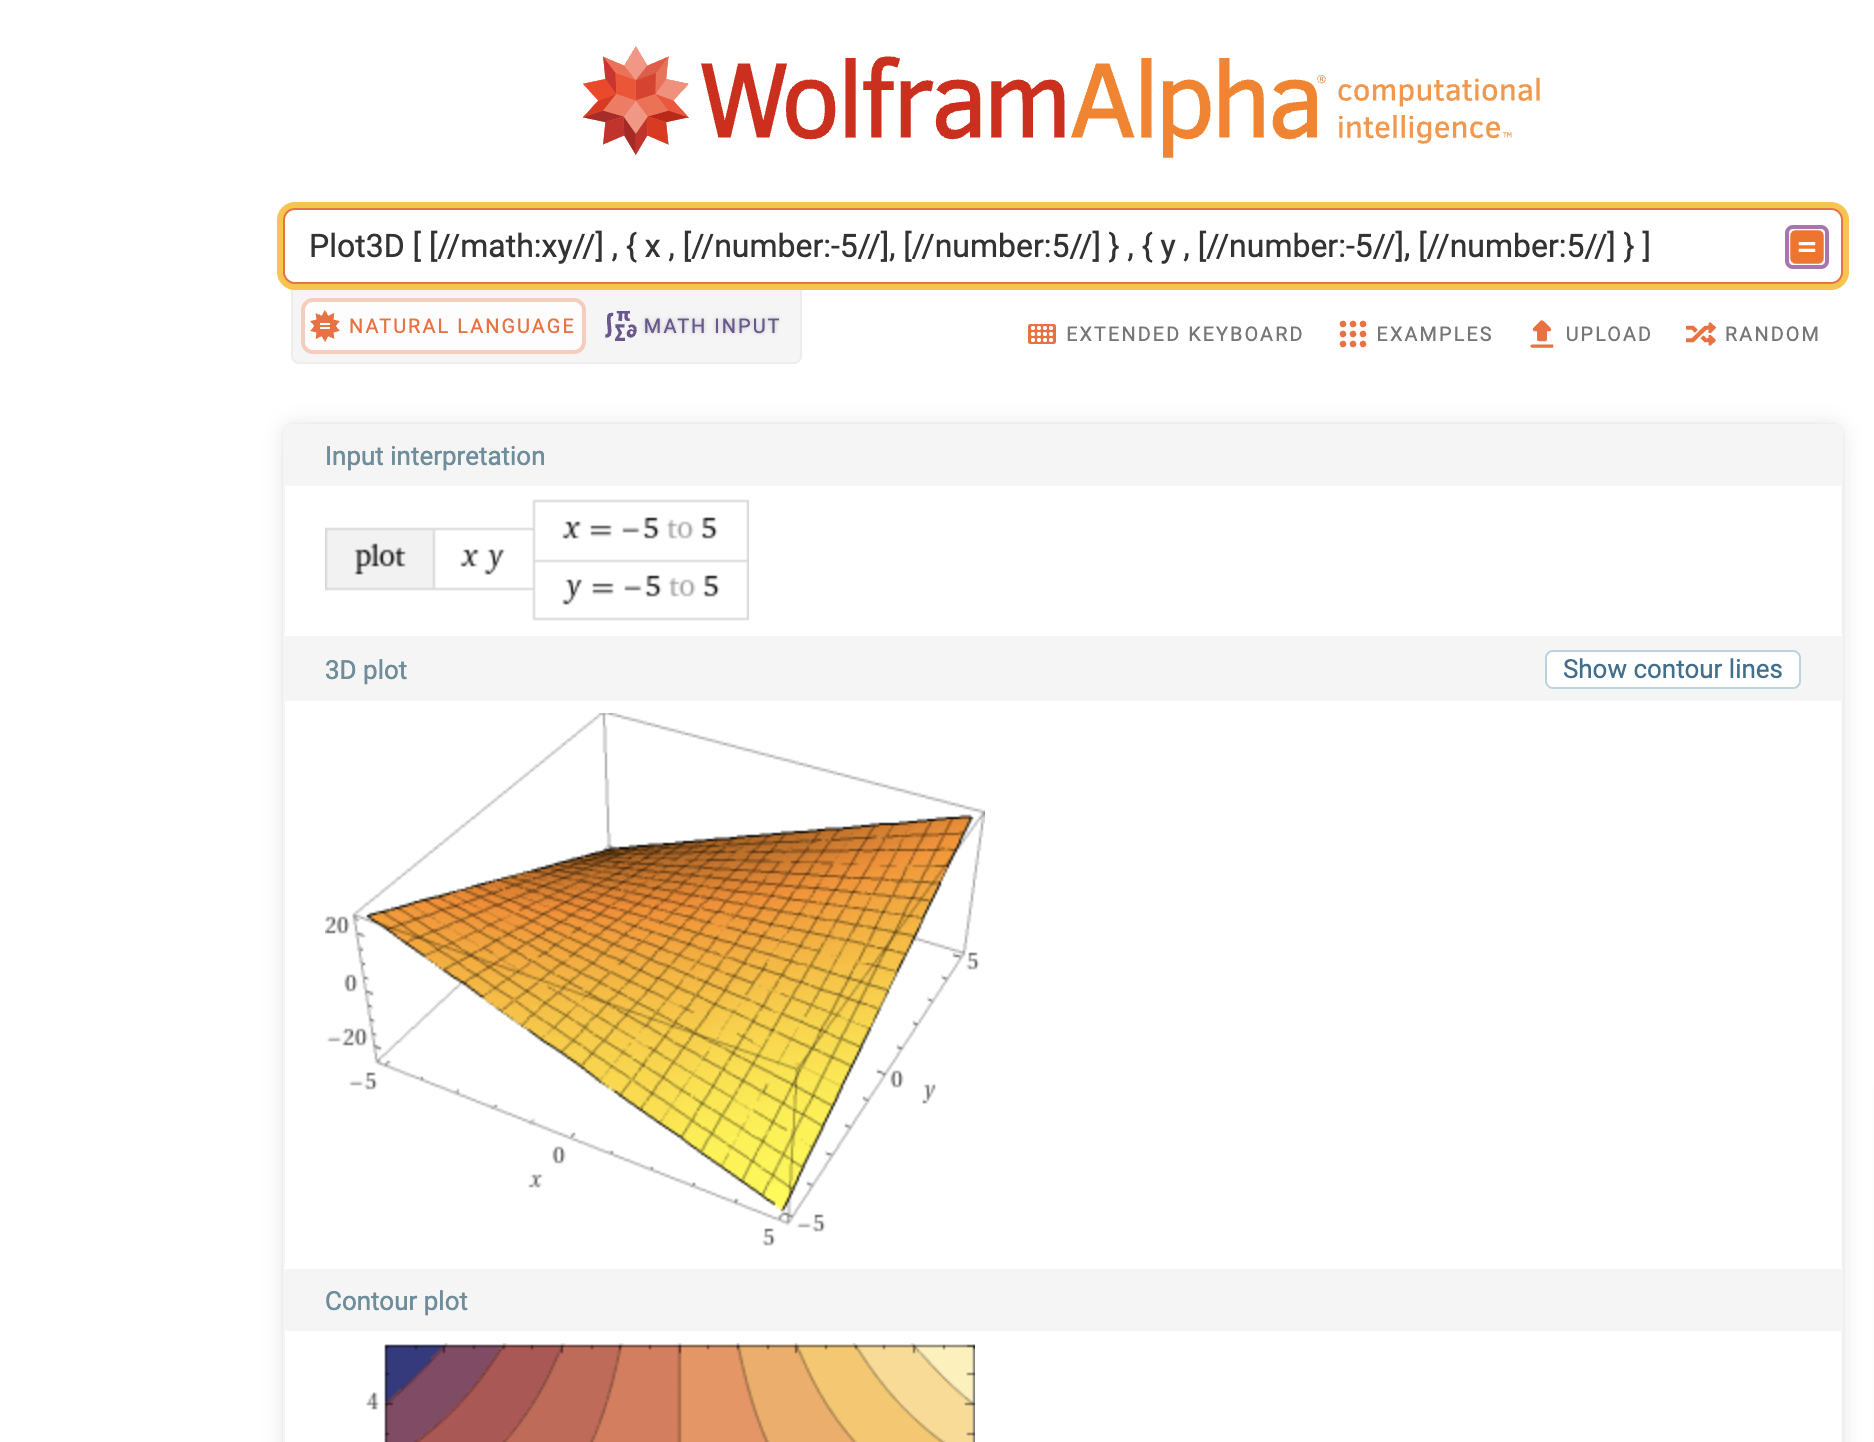 You Can Now Access Quantum Computing Via Wolfram Mathematica